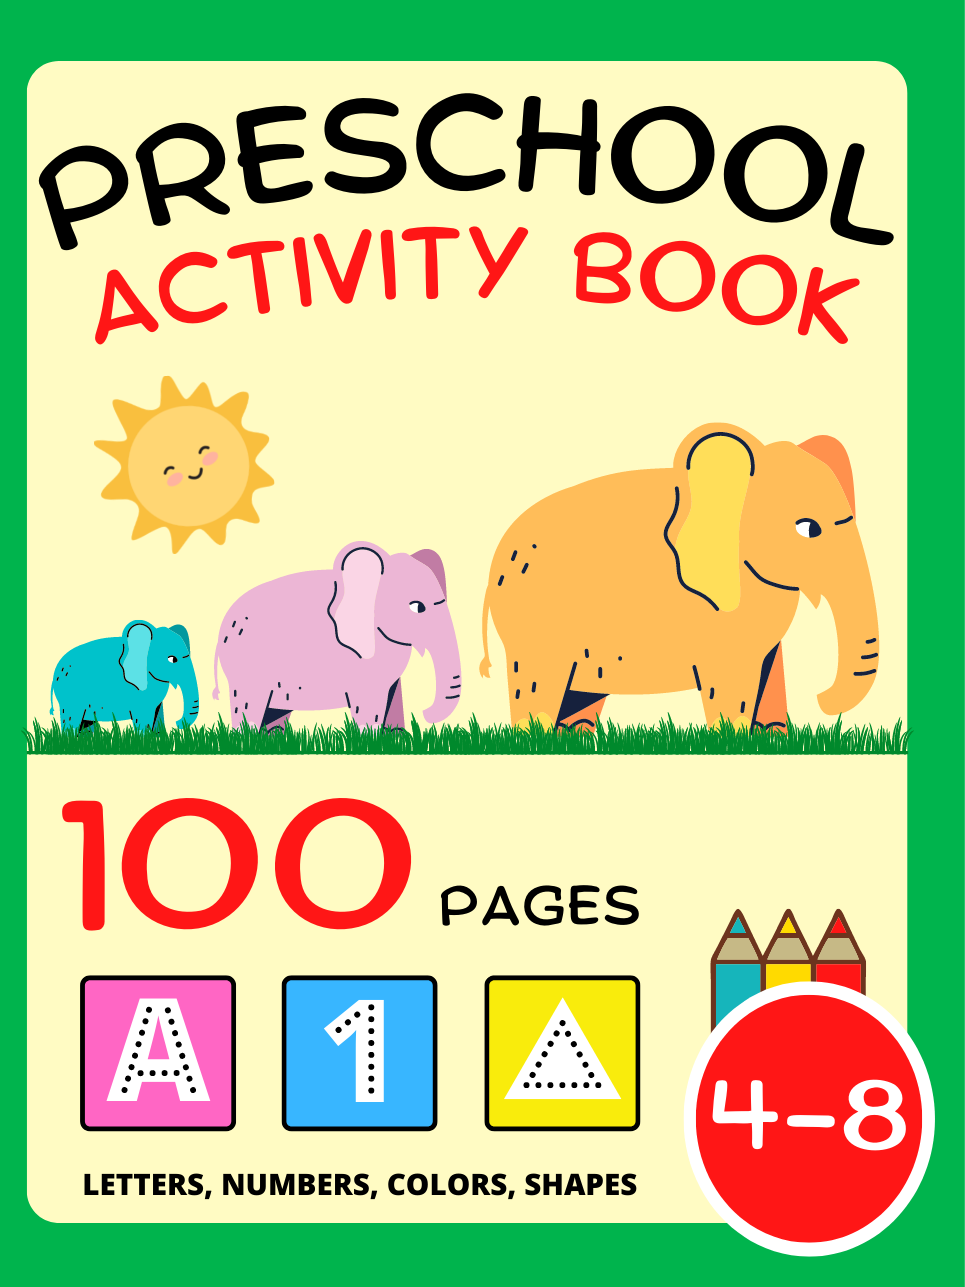 Preschool Activity Books For Kids Ages 4-8